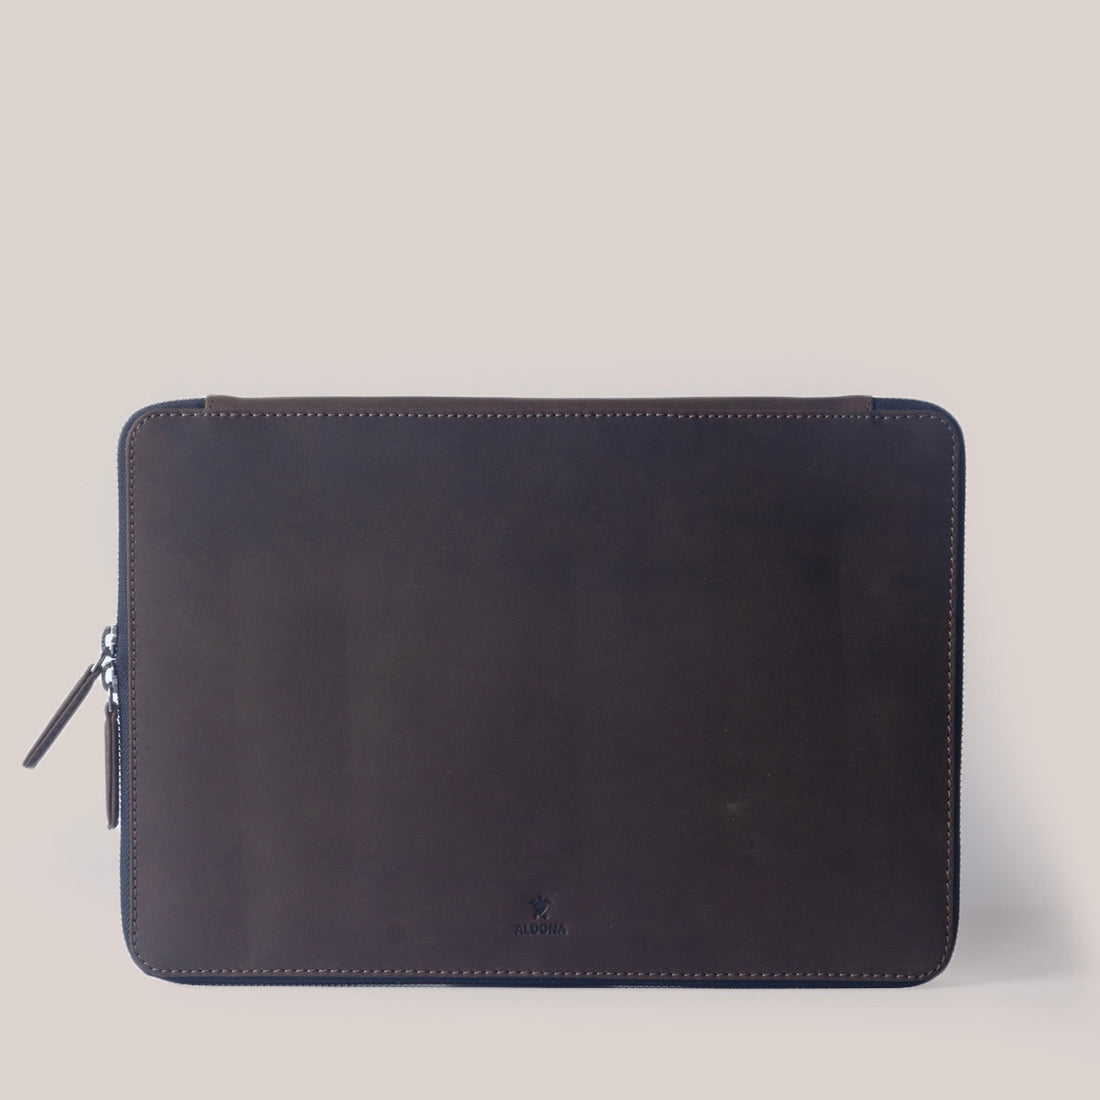 DELL XPS 15 Zippered Laptop Case - Vintage Tan